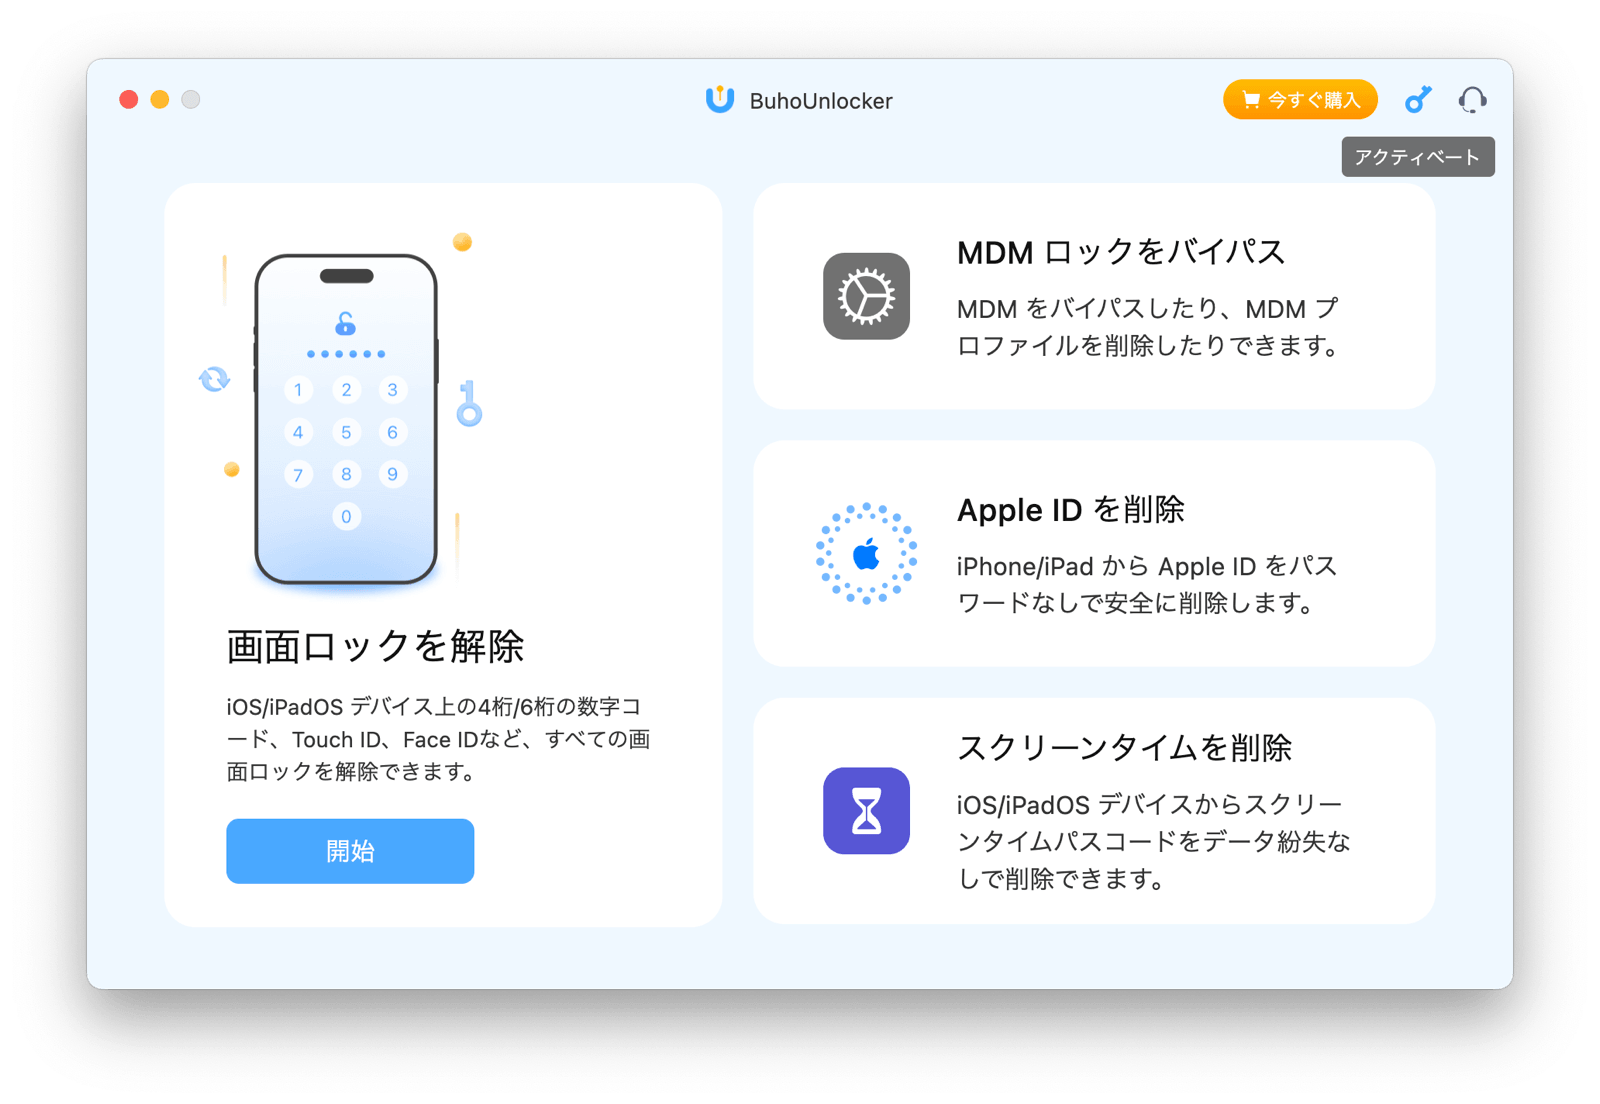 activate-buhounlocker-jp.png